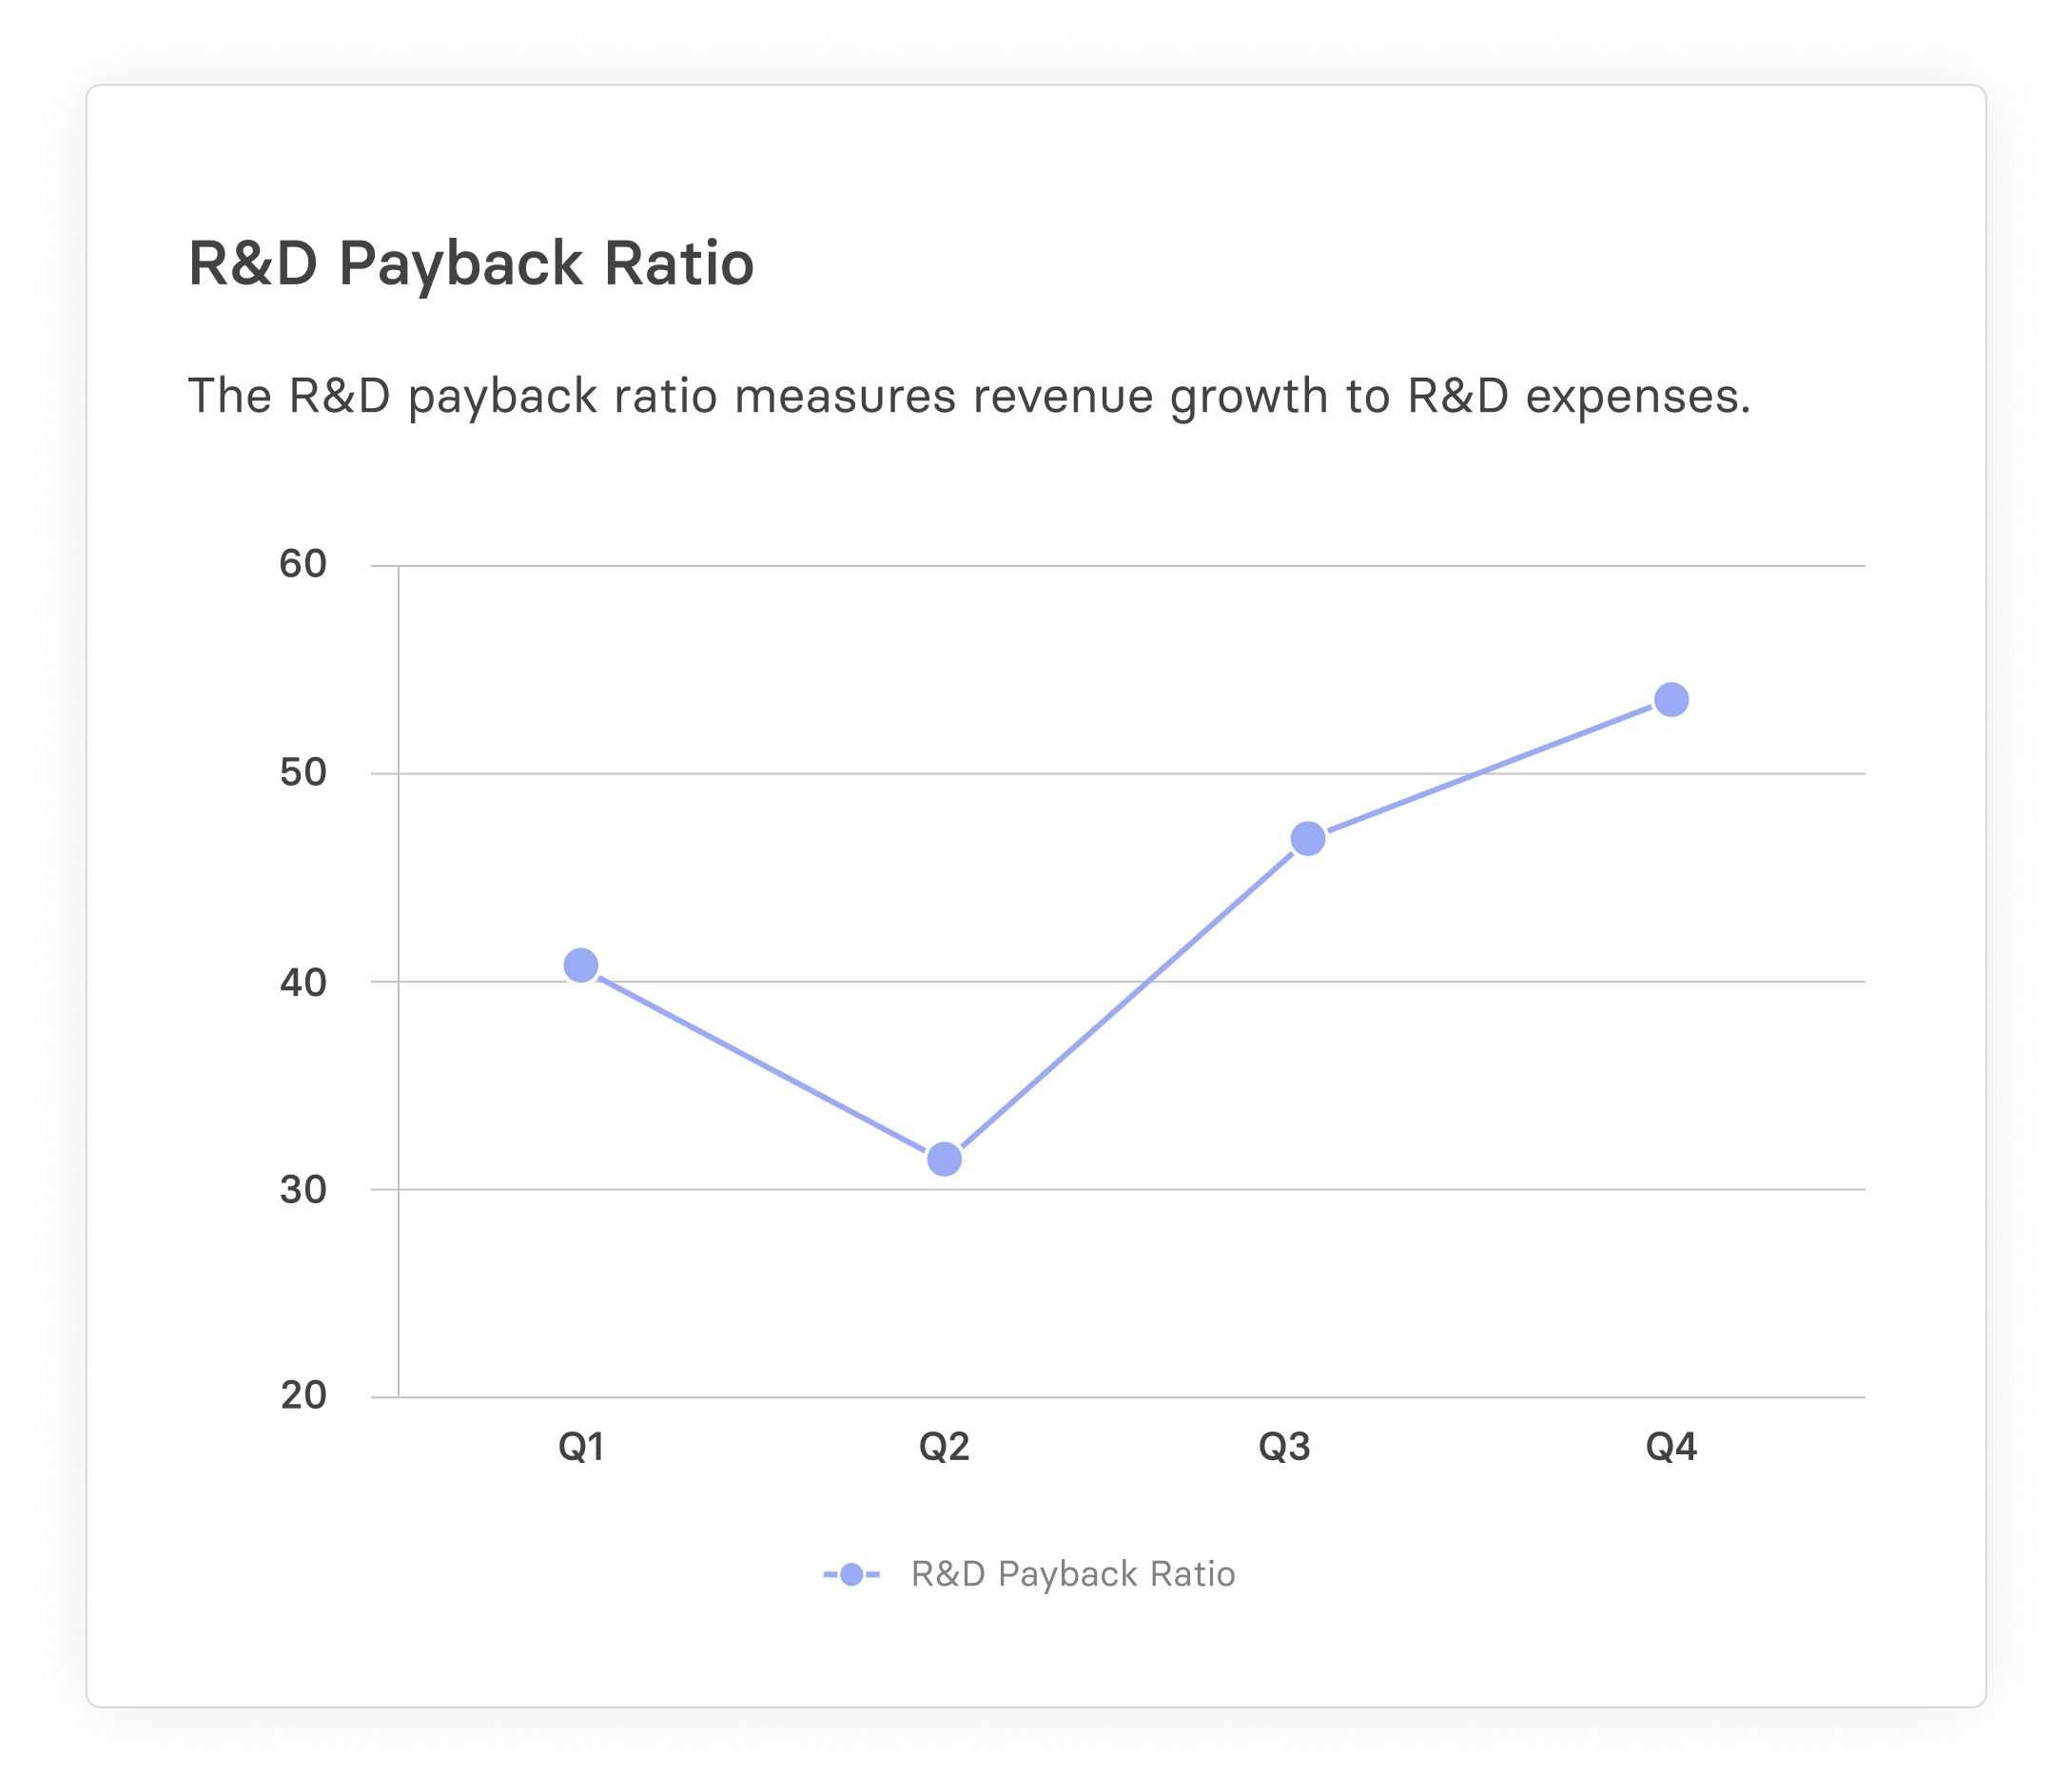 R&D payback ratio graph